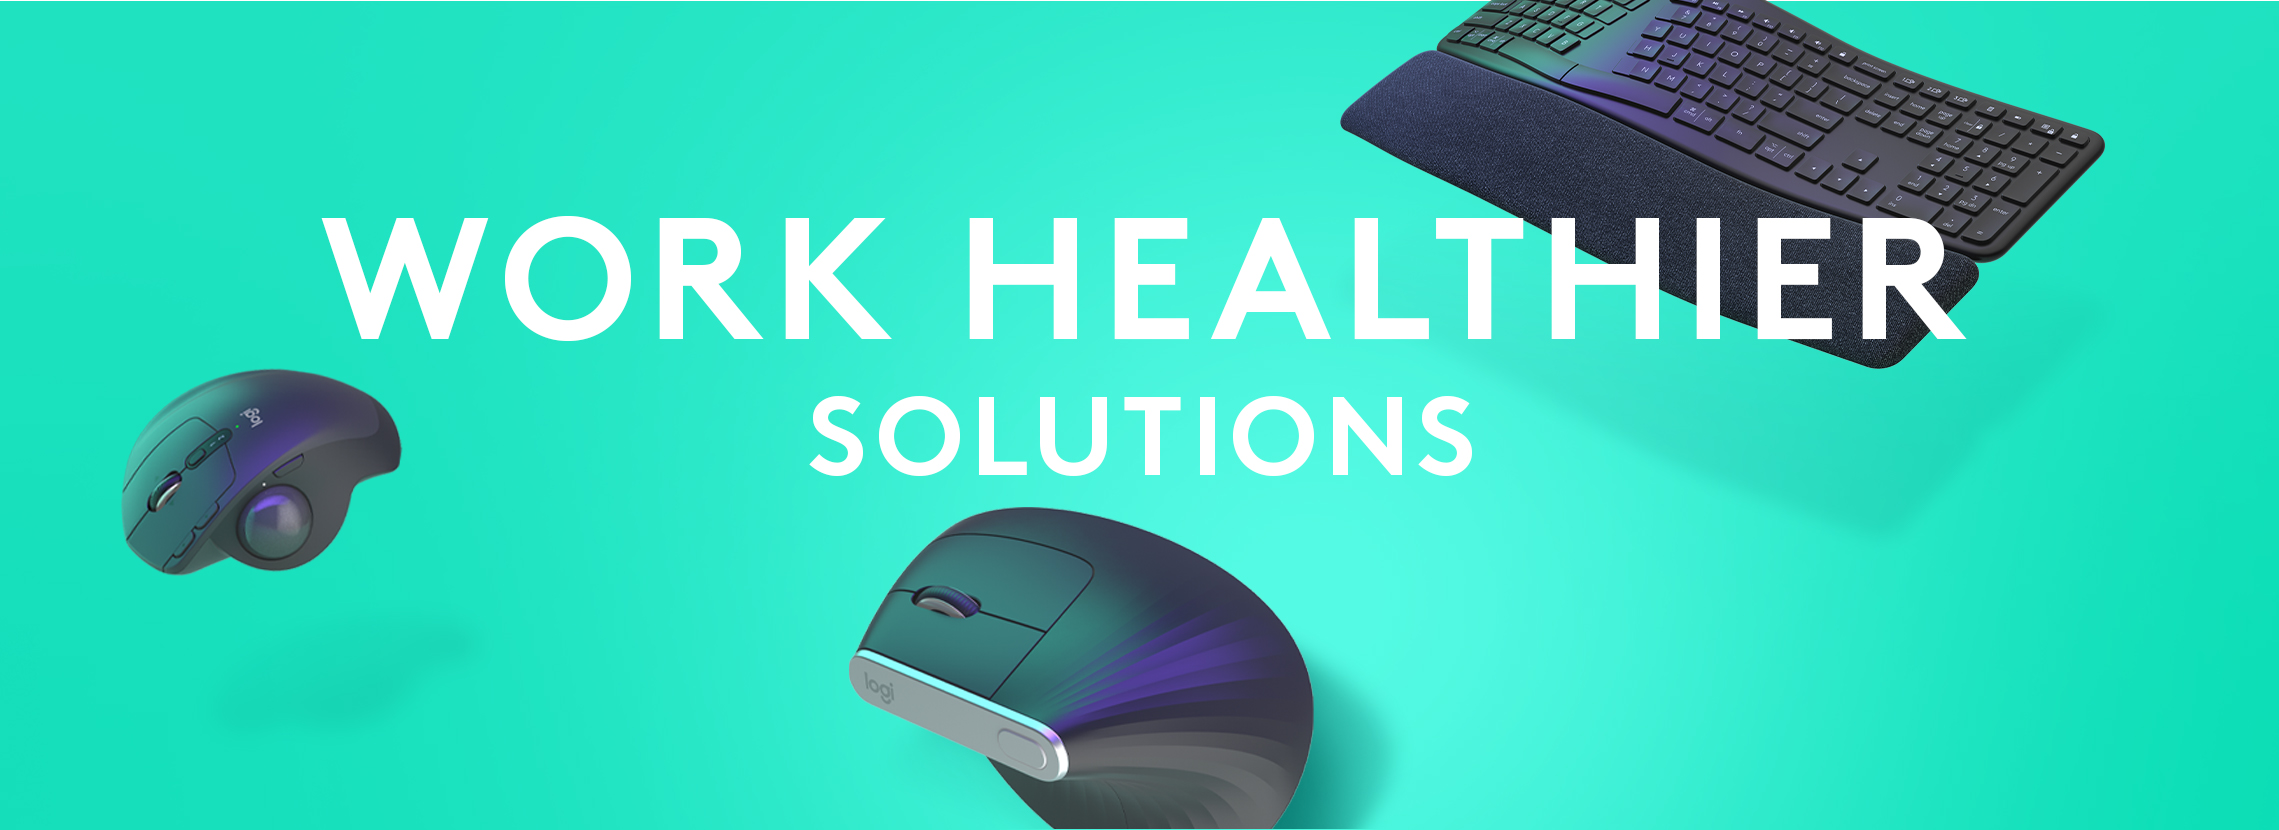 work healthier solutions banner